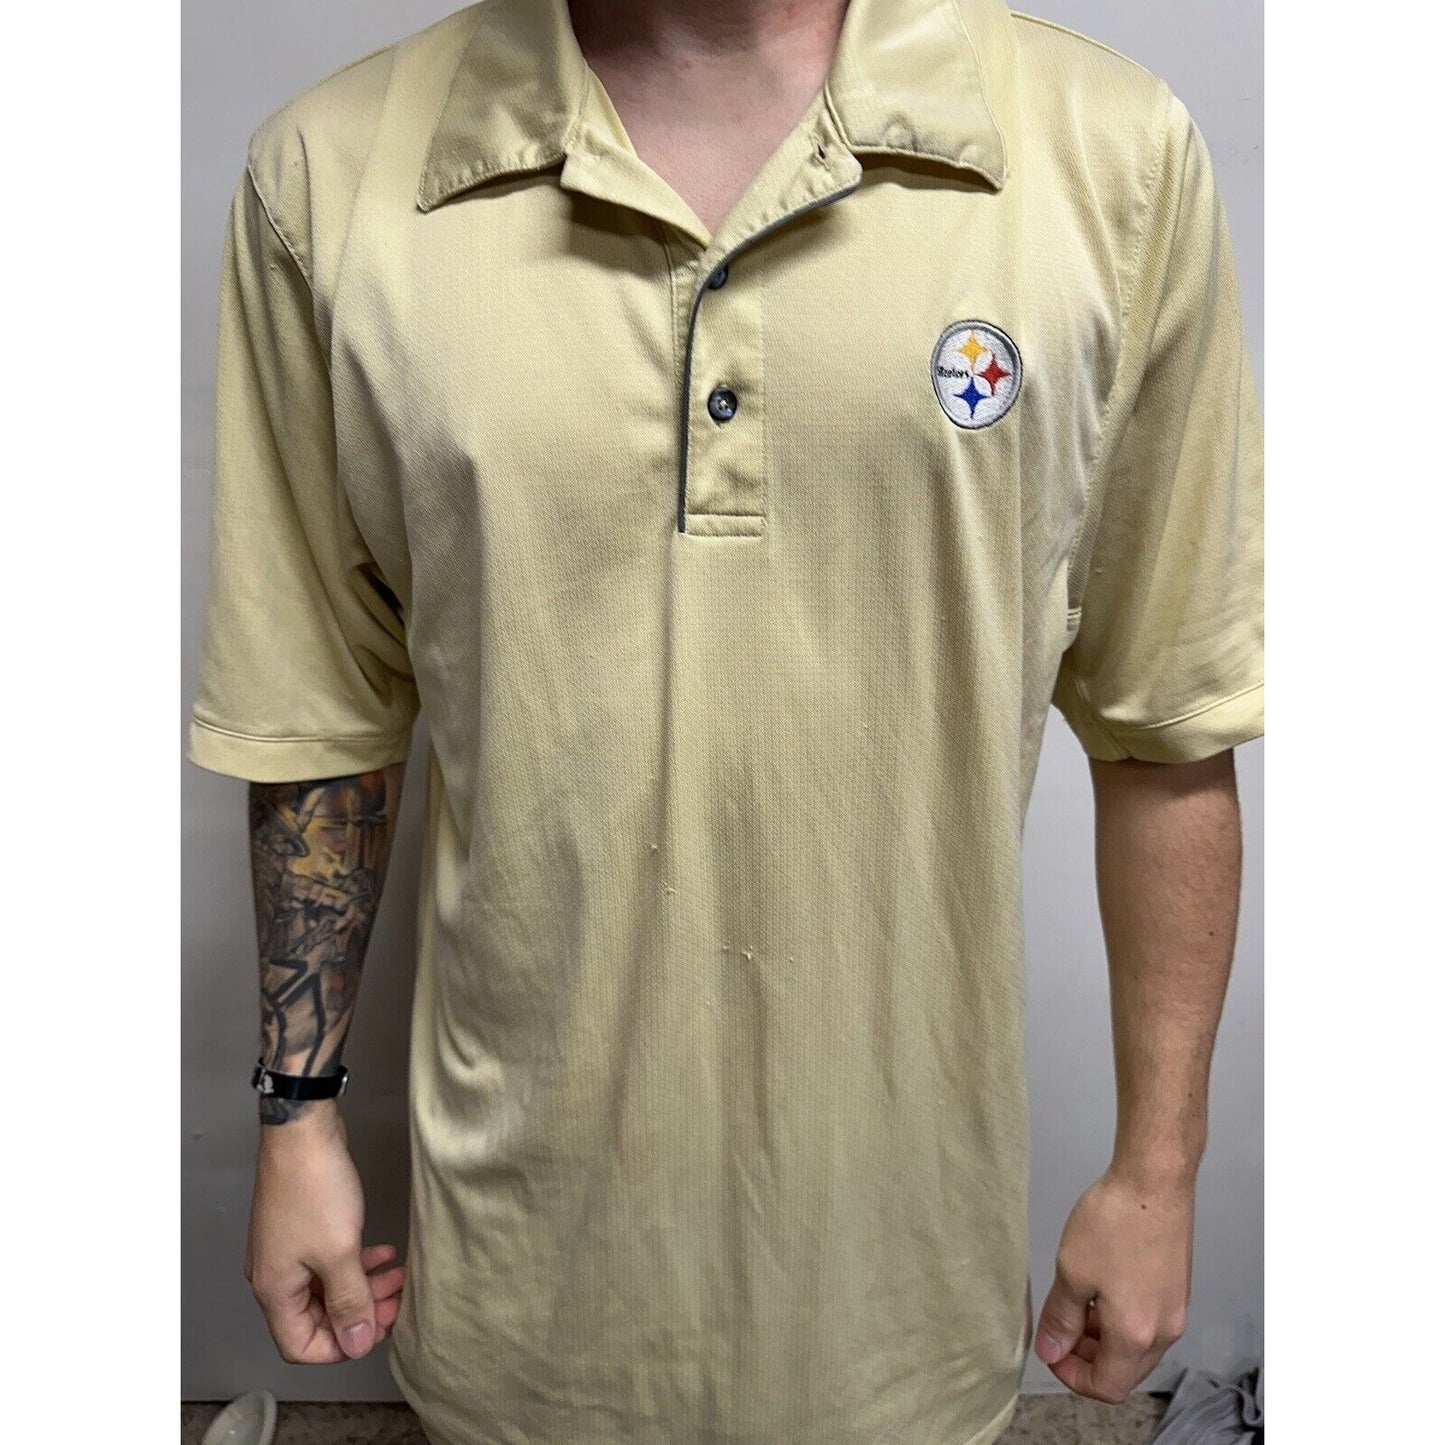 Men’s Medium Pittsburgh Steelers Prestige Sport Yellow Polo Shirt NFL